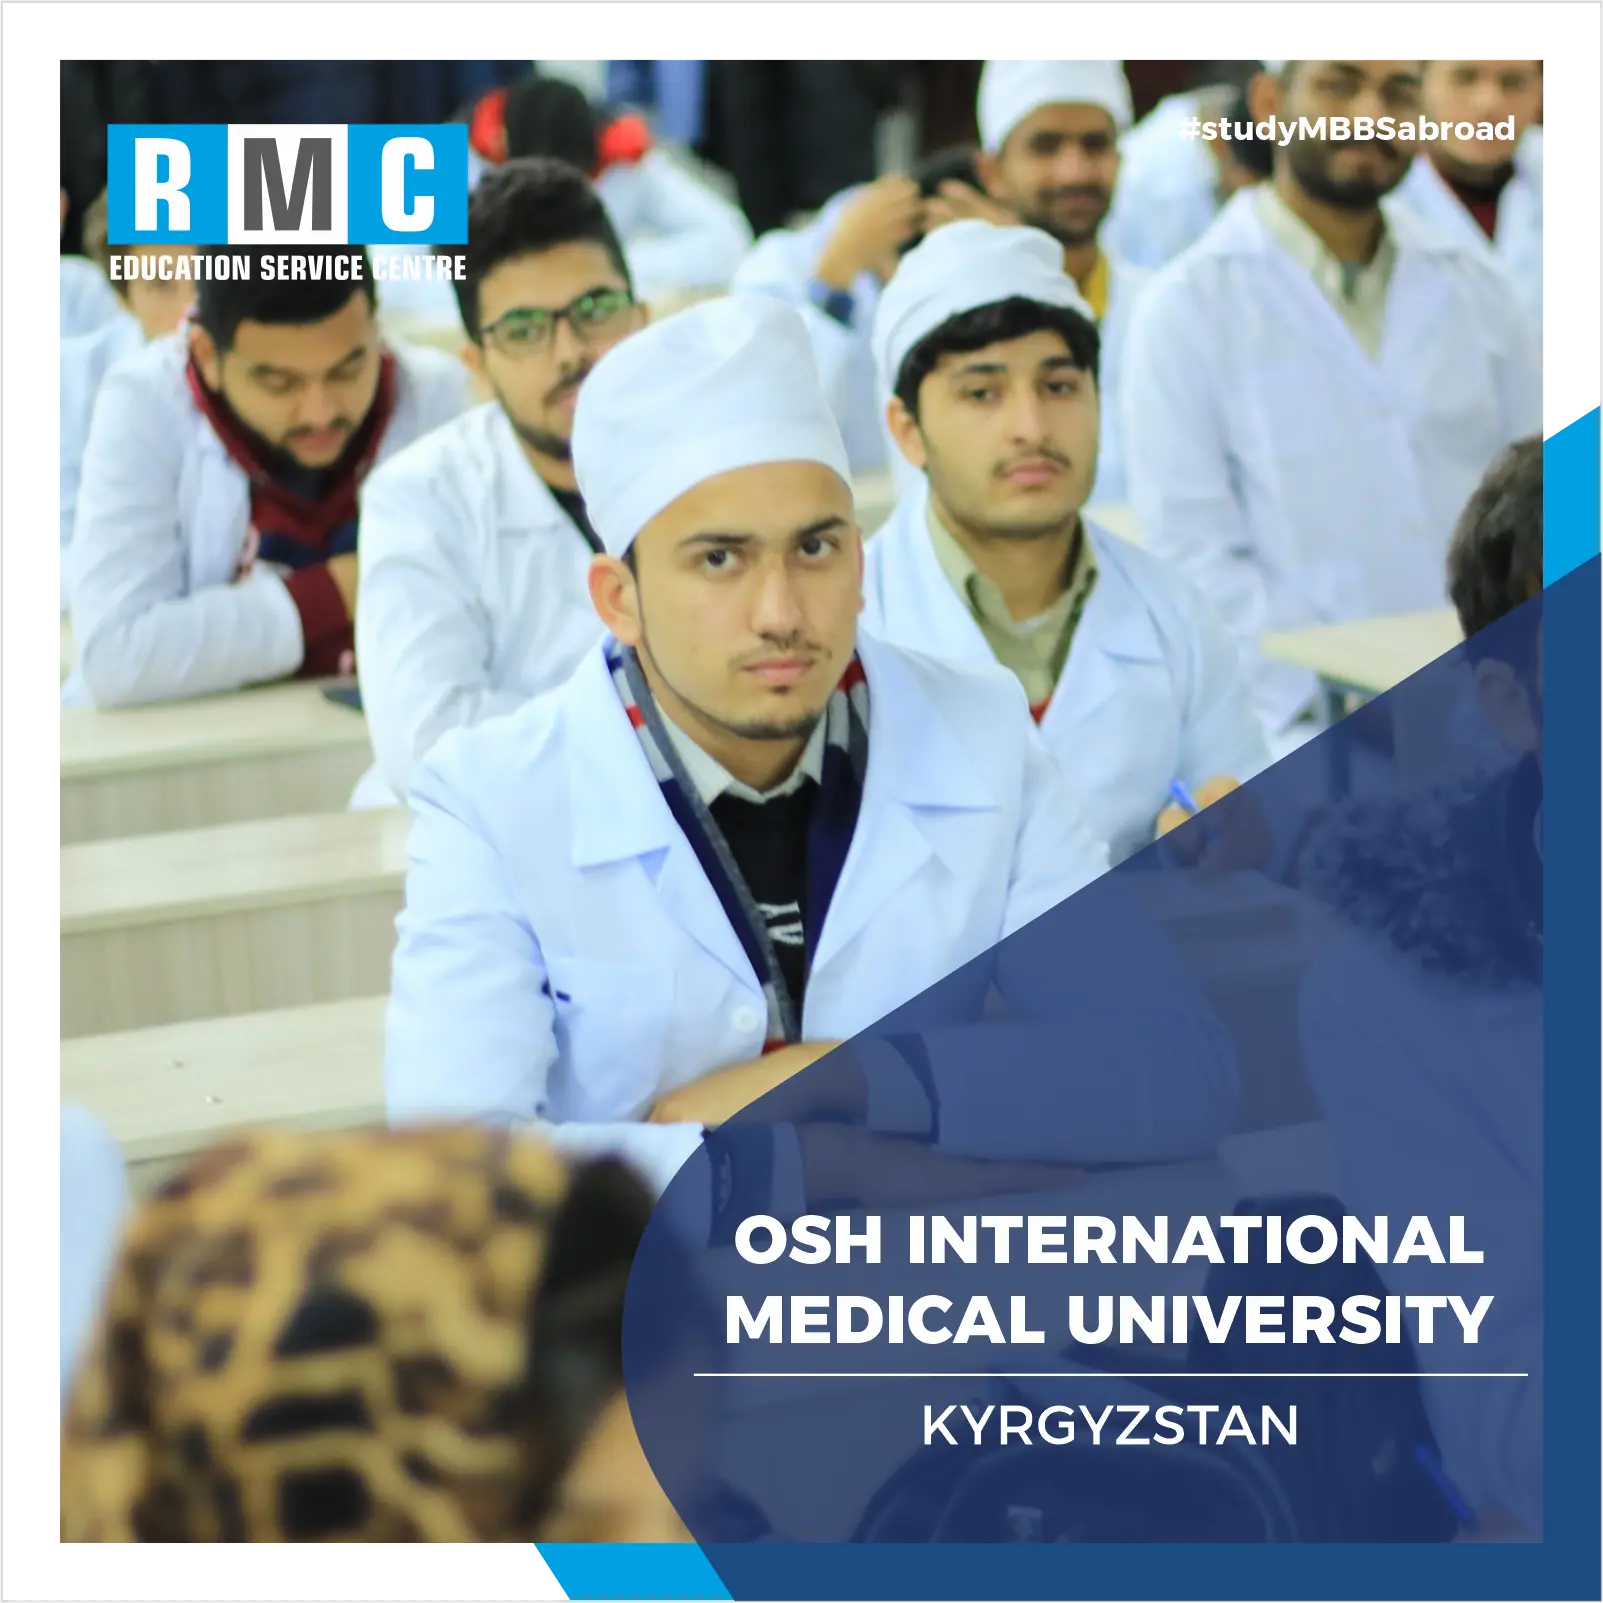 Osh International Medical University